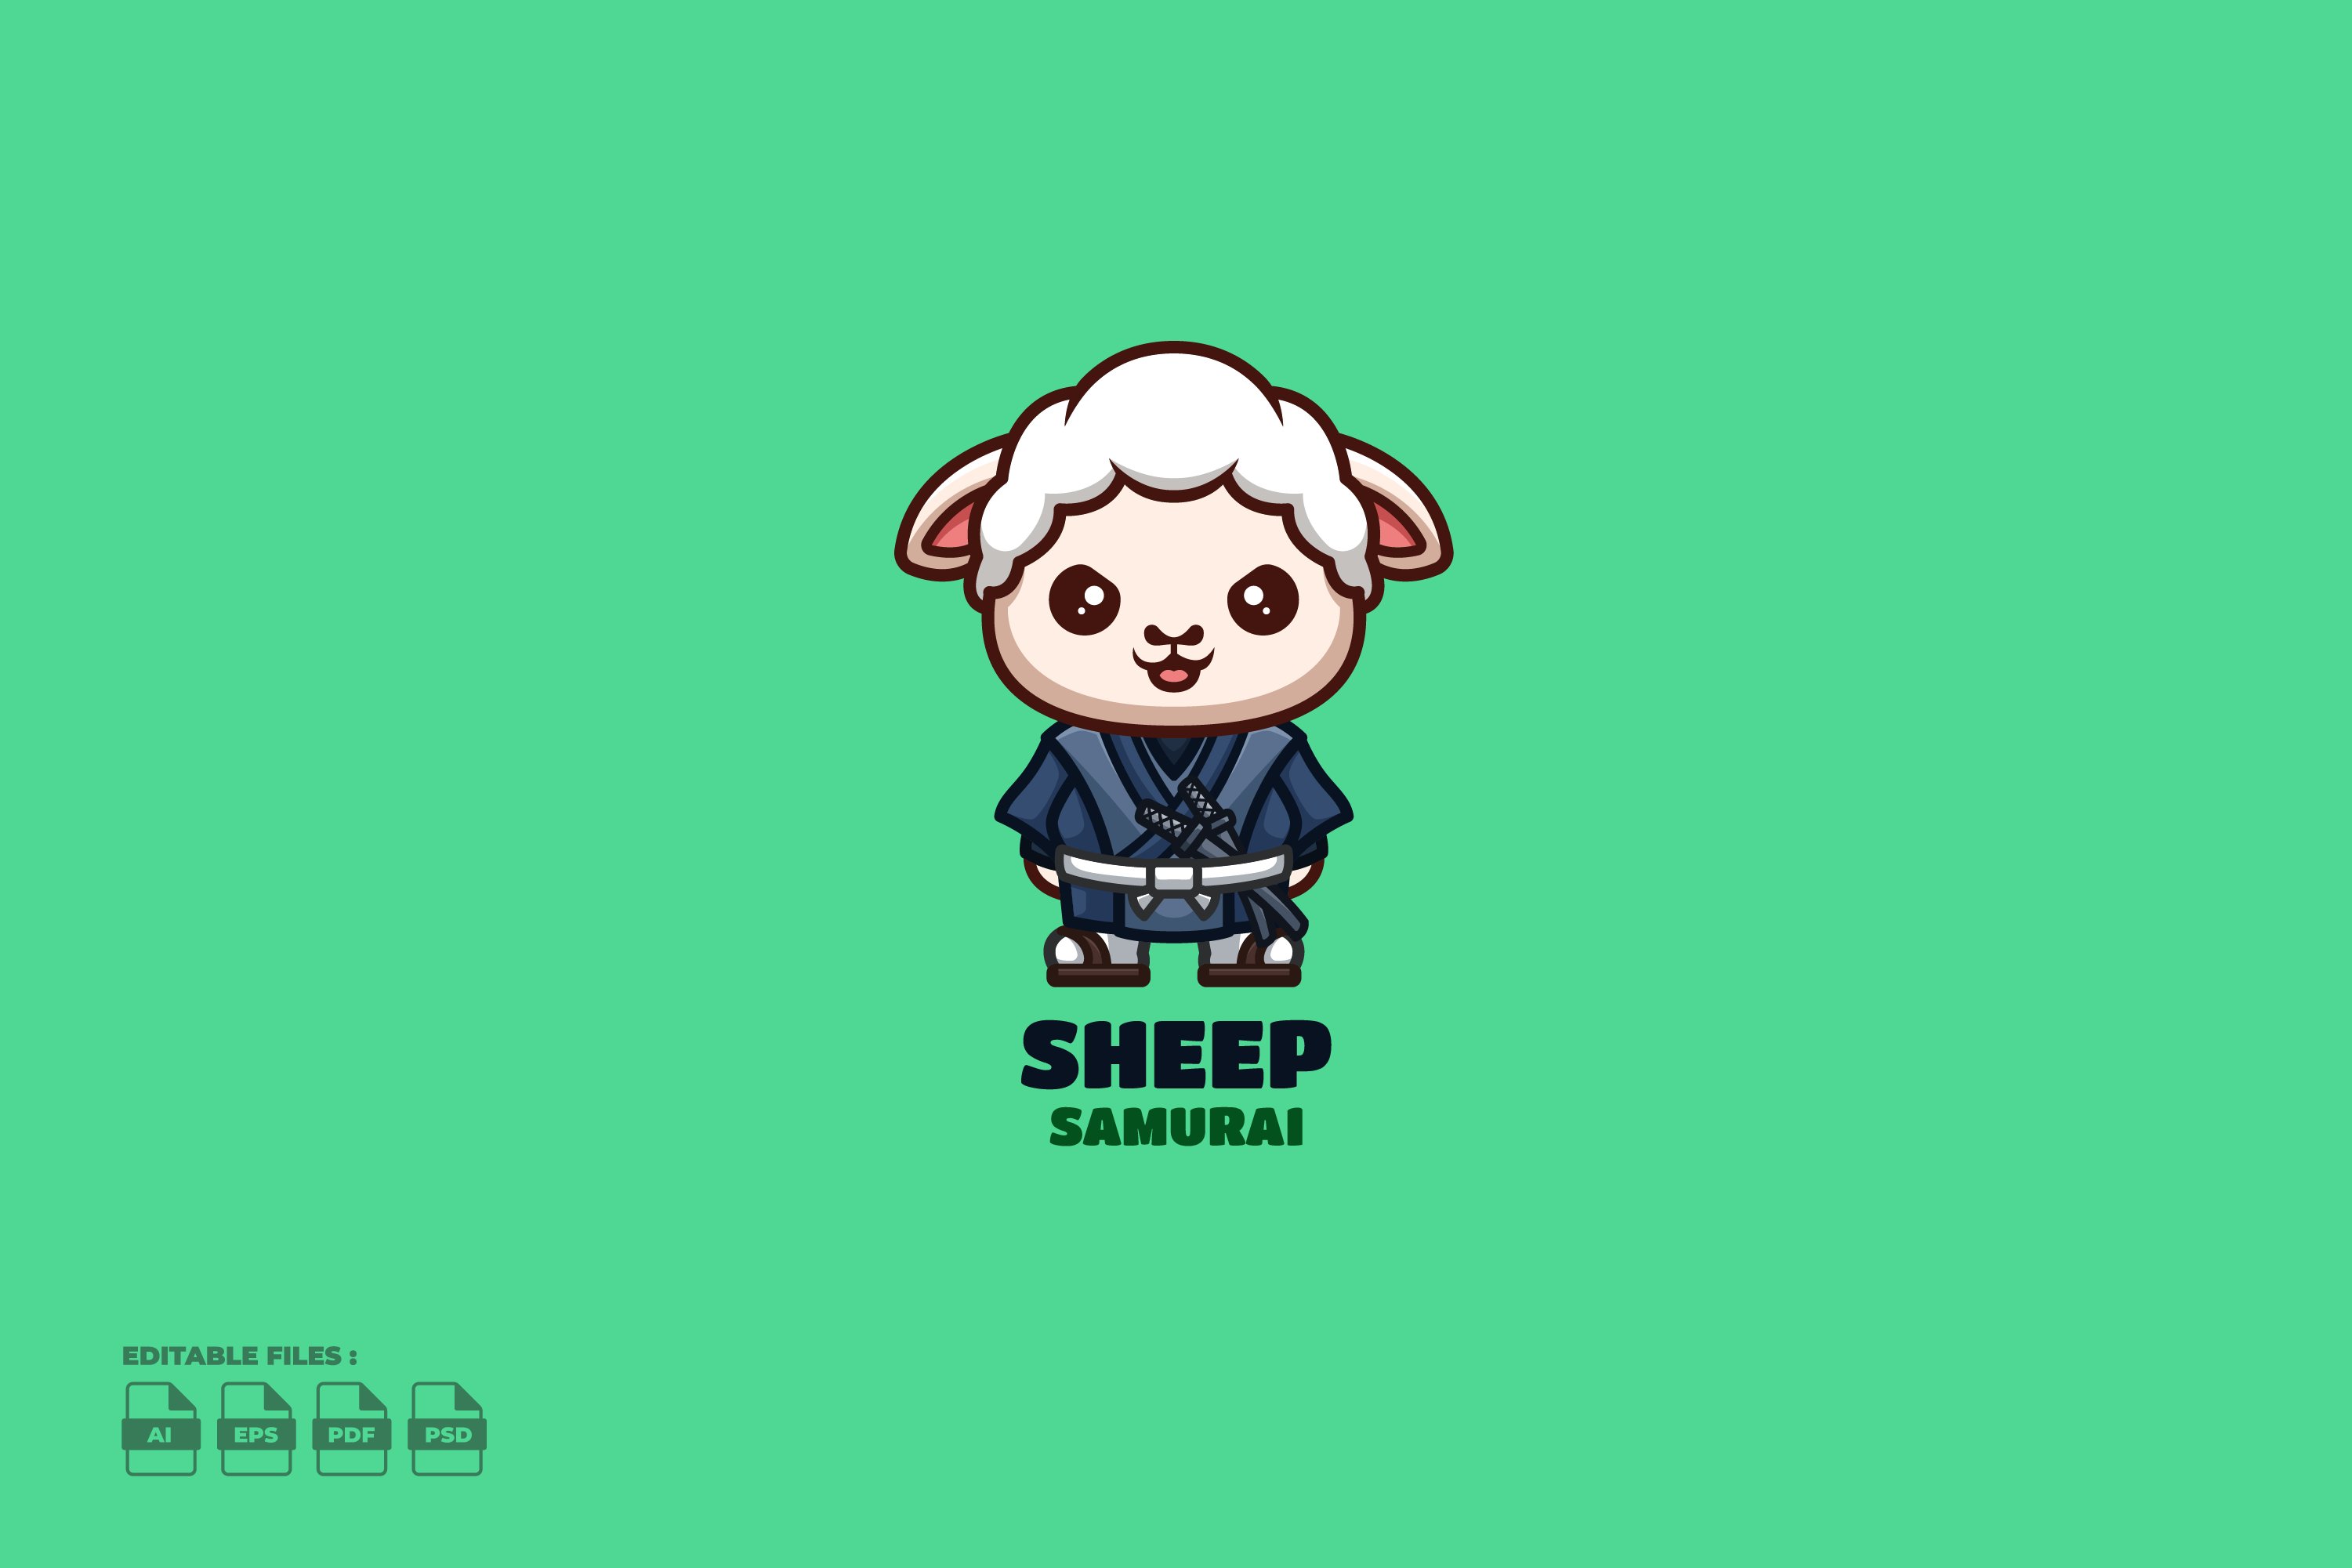 Samurai Sheep Cute Mascot Logo cover image.